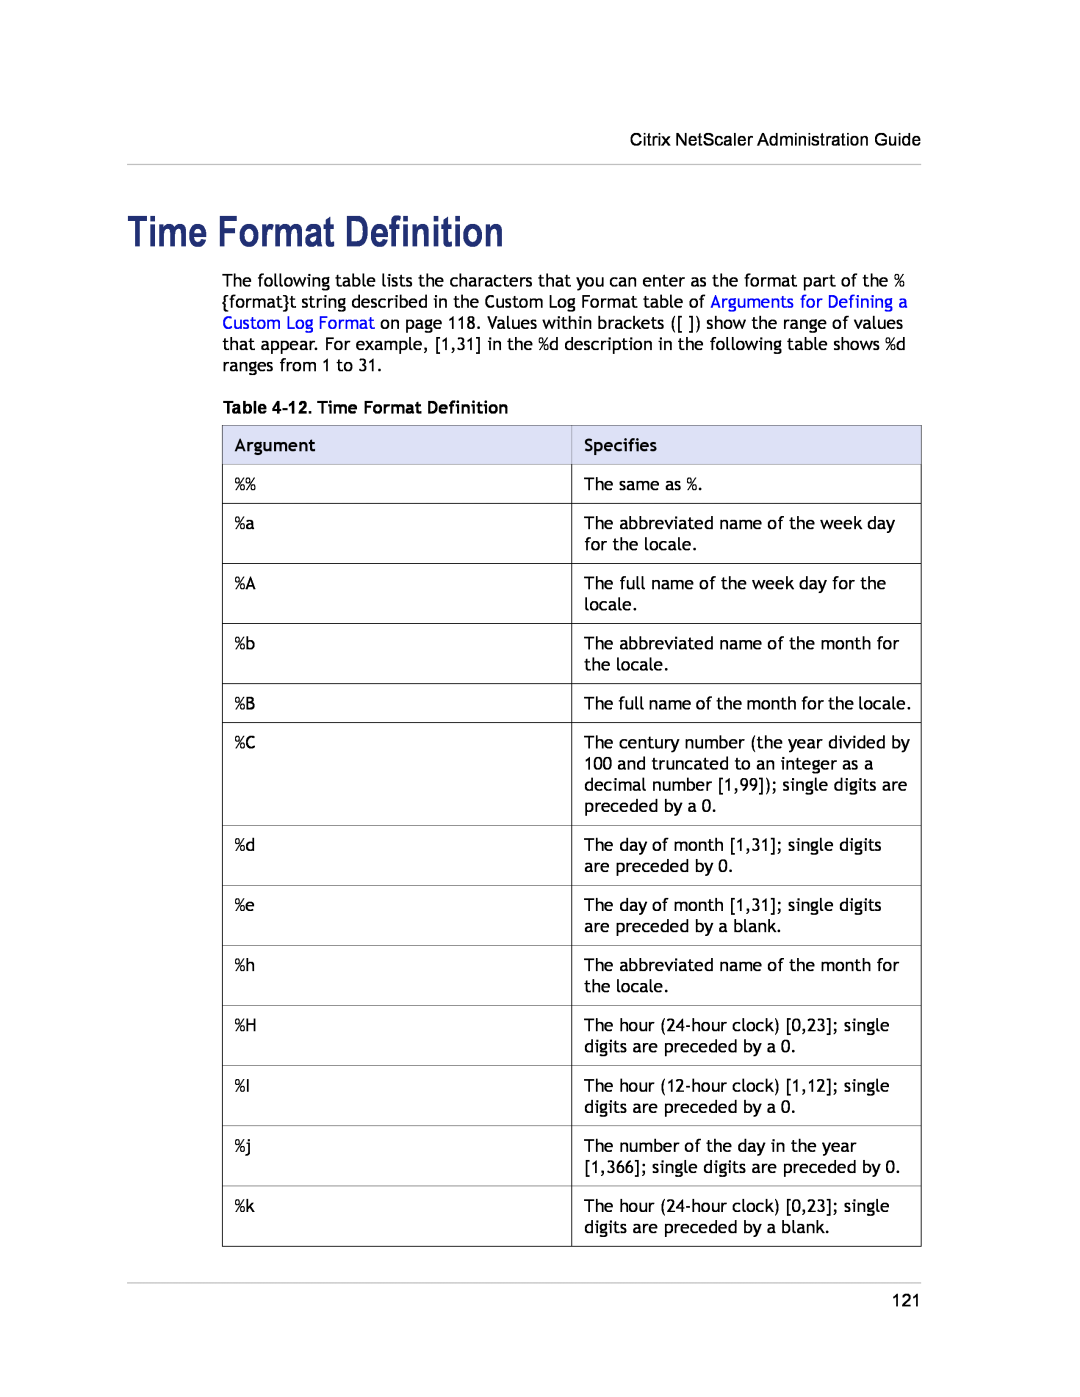 Citrix Systems CITRIX NETSCALER 9.3 manual 12. Time Format Definition, Argument, Specifies 